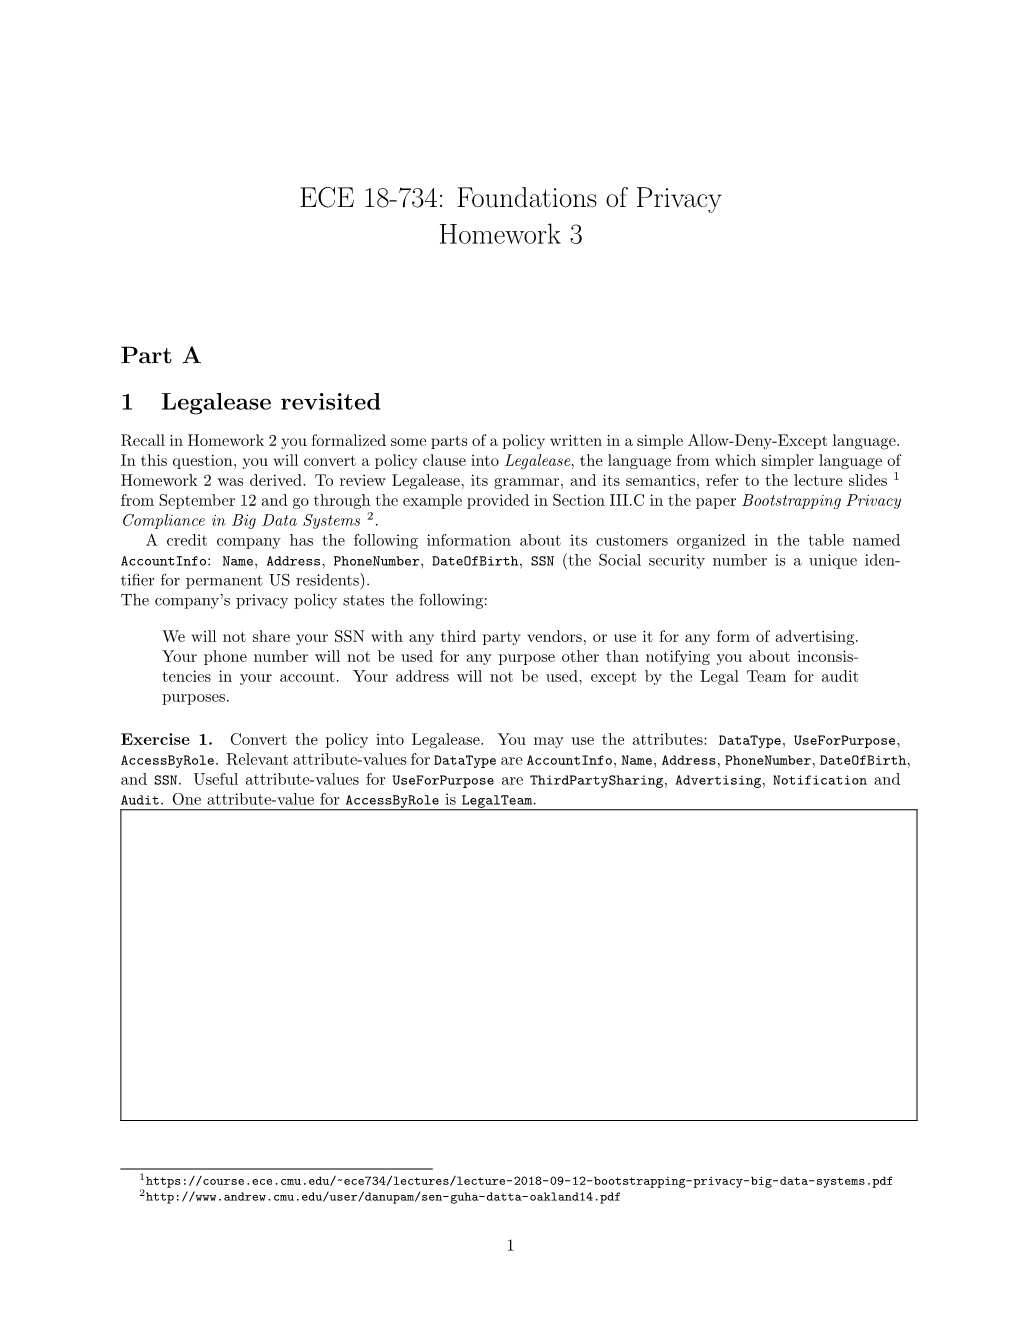 ECE 18-734: Foundations of Privacy Homework 3